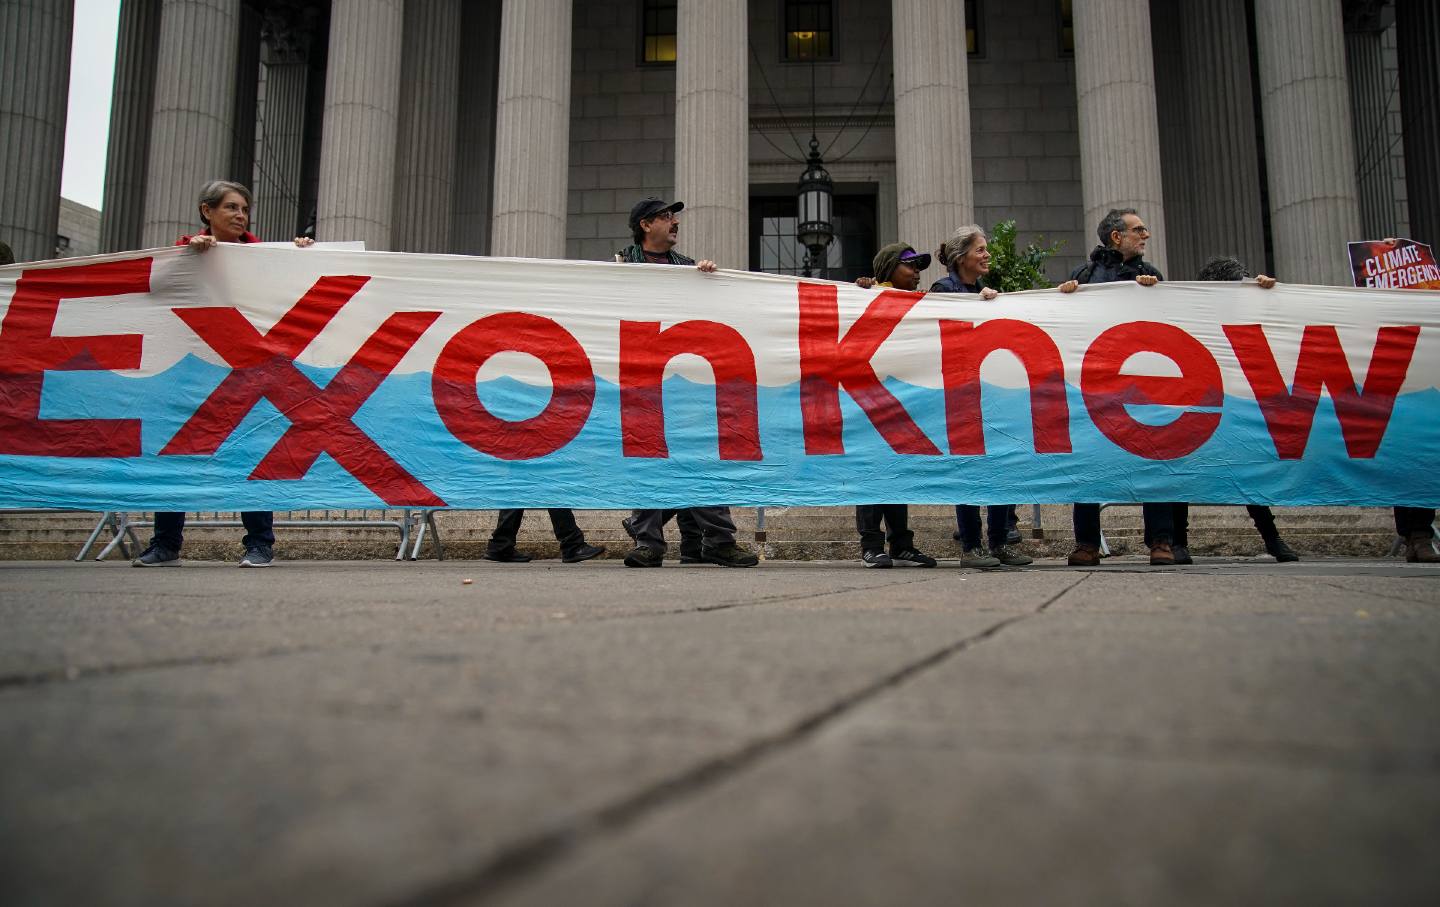 Exxon Mobile Protesters Rally